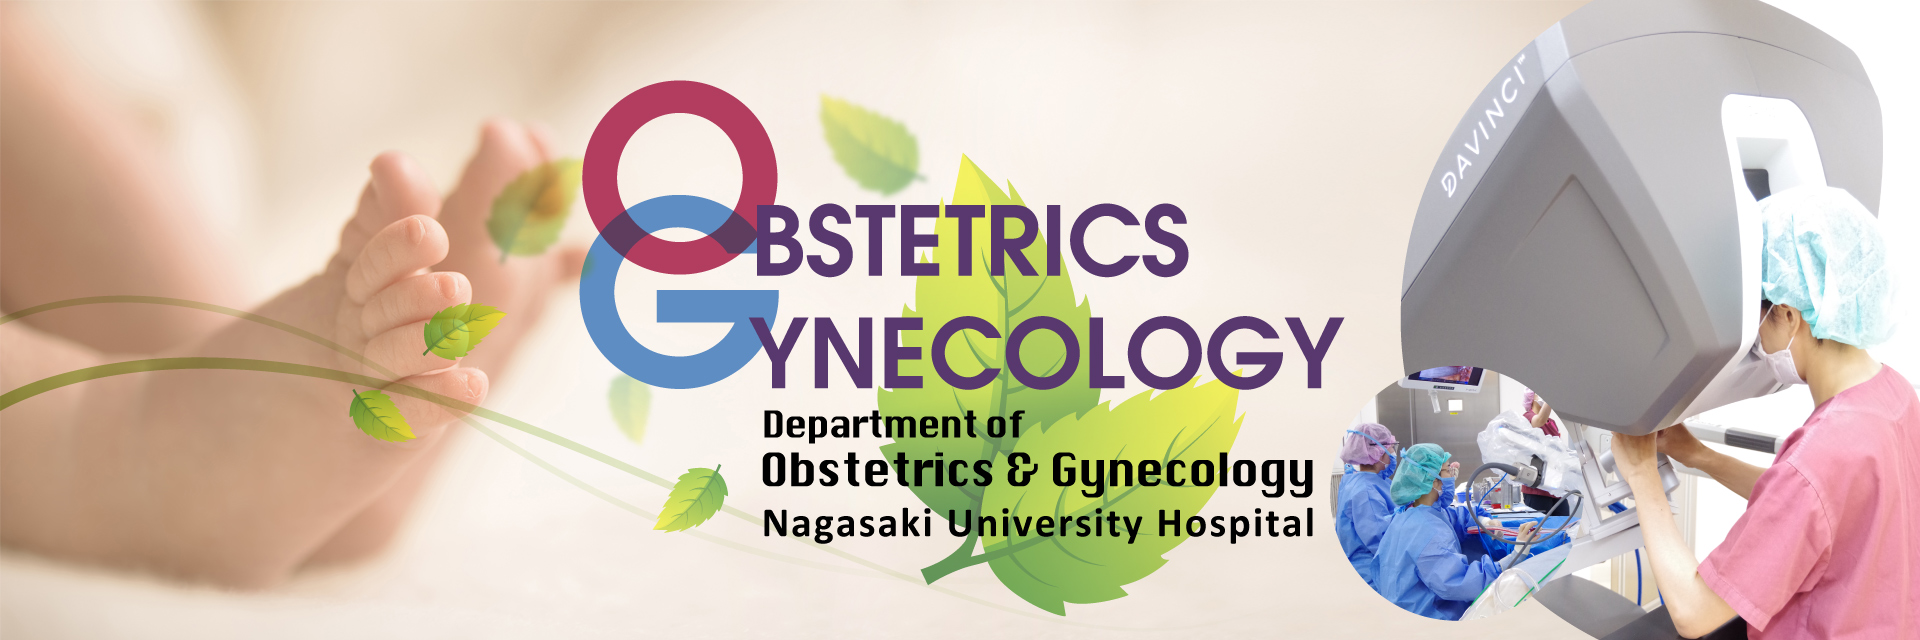 Department of Obstertrics & Gynecology, Nagasaki University Hospital